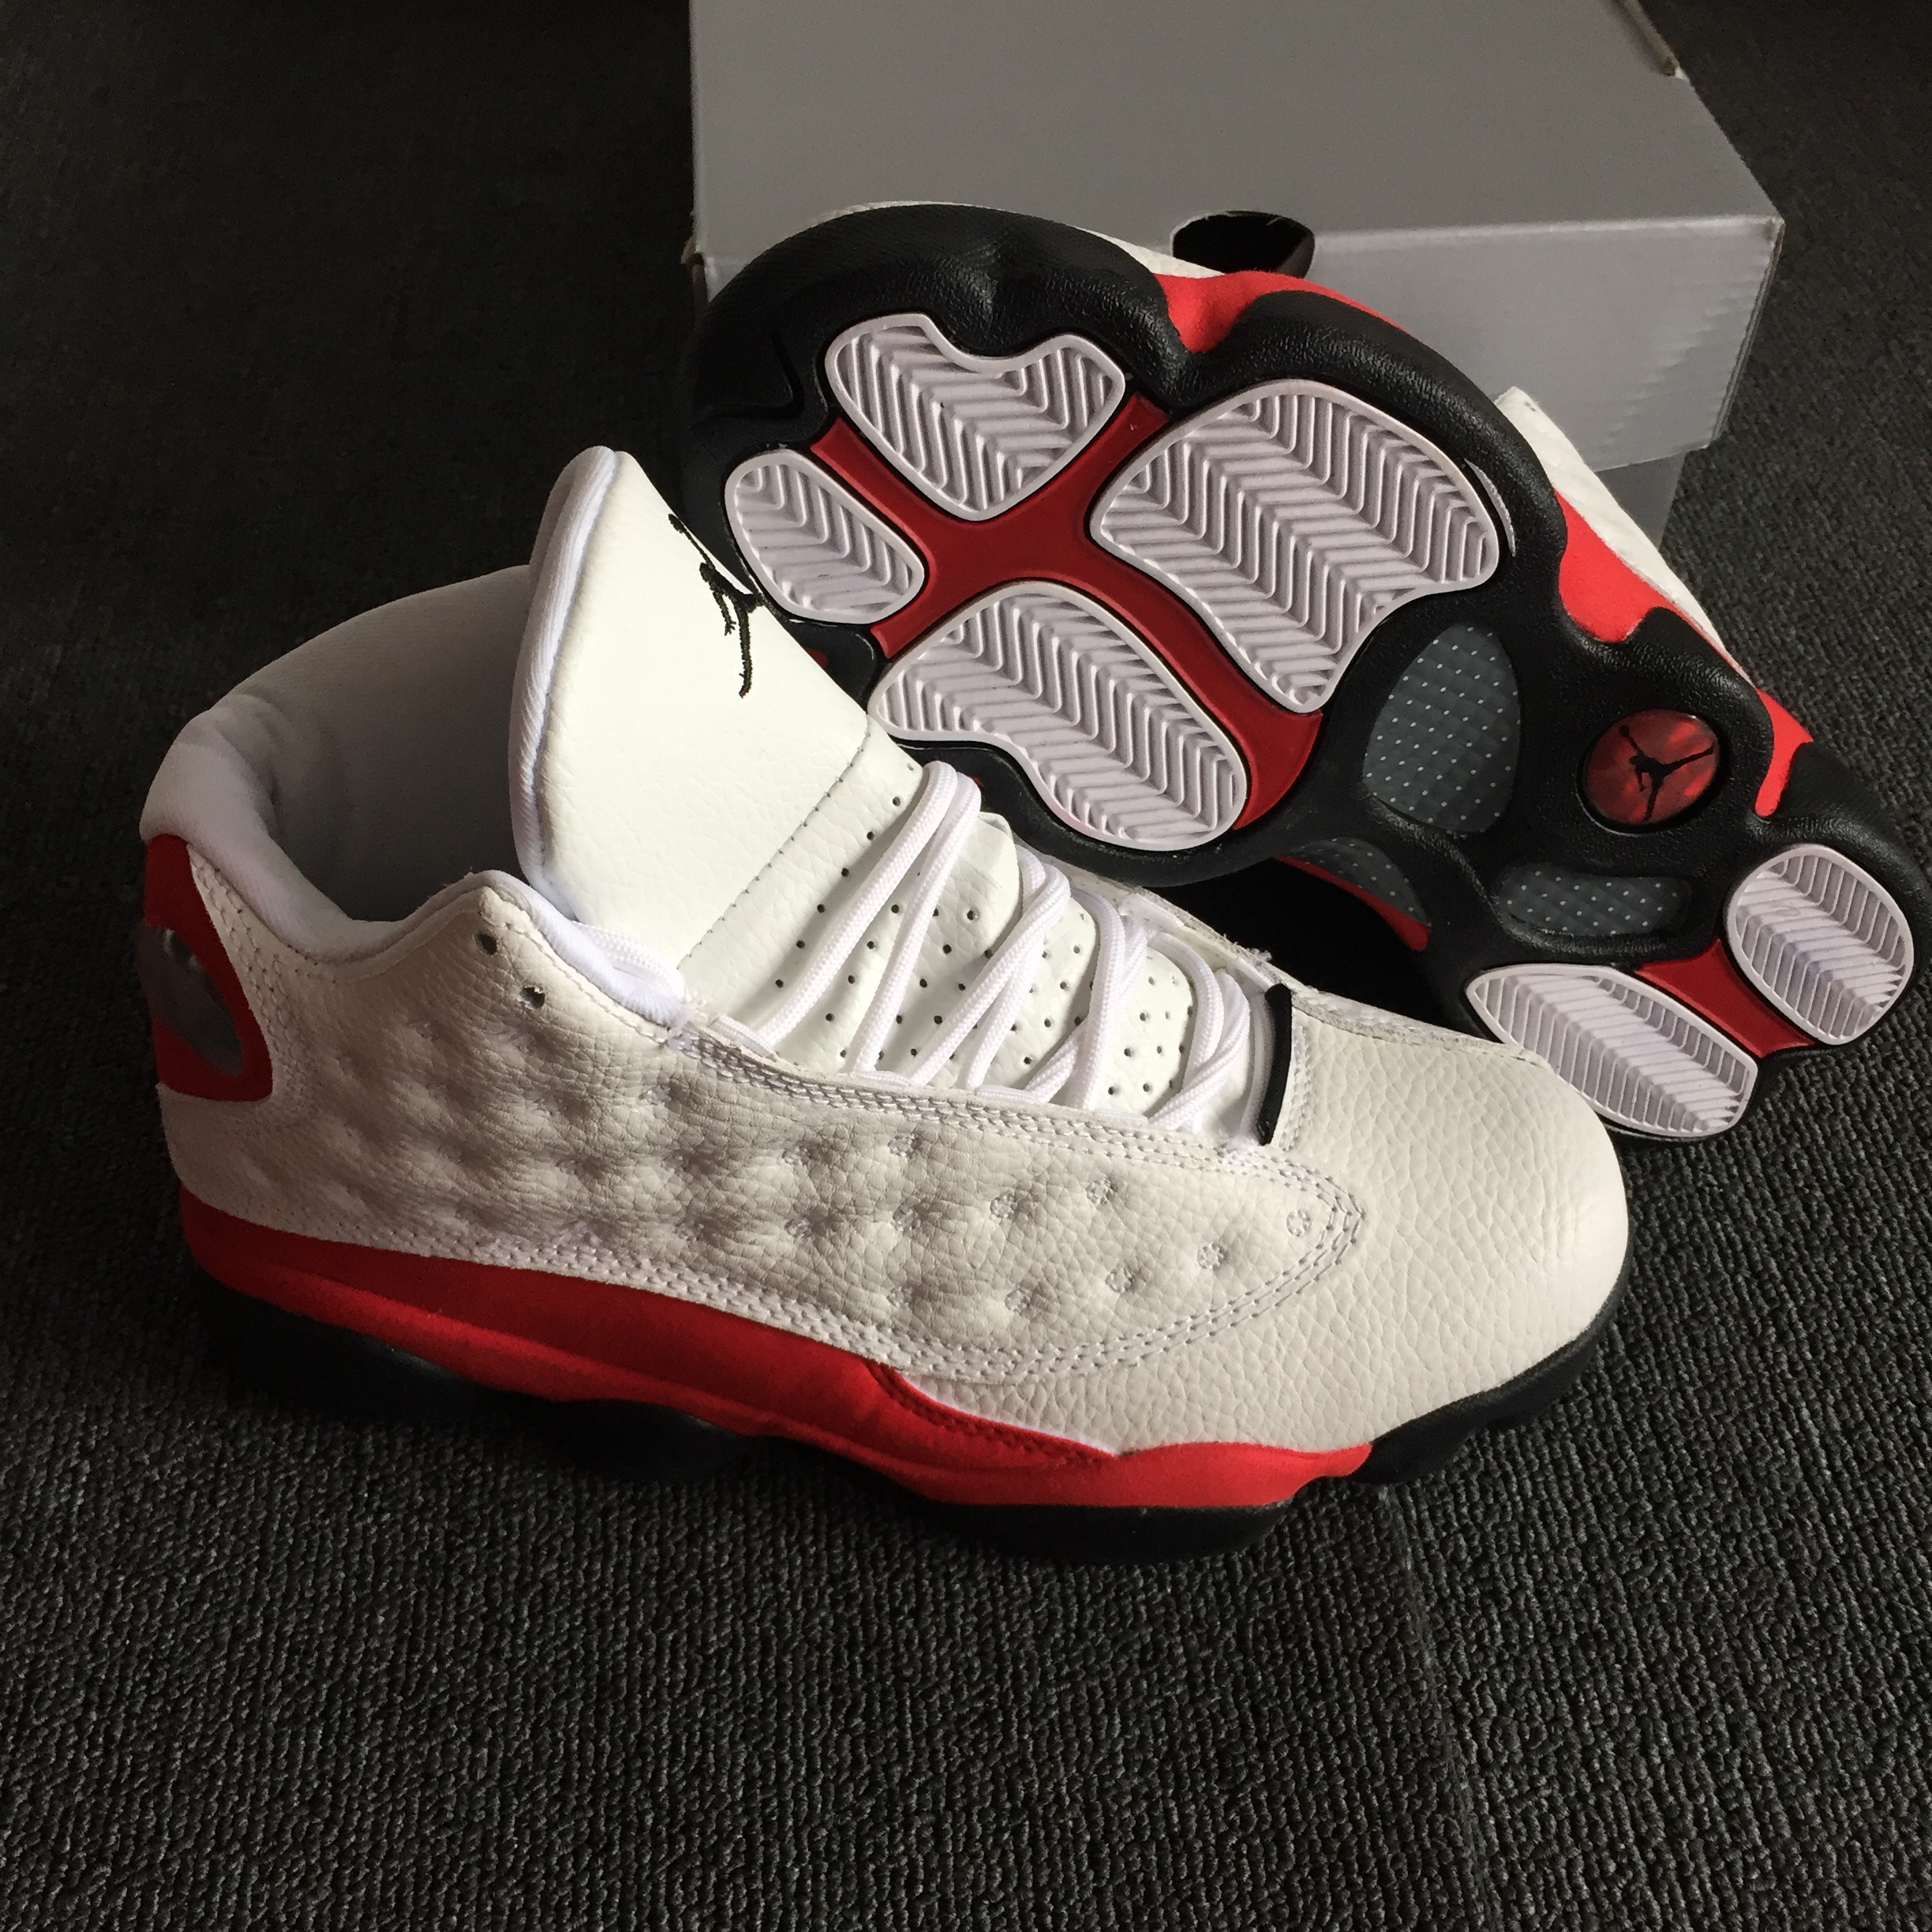 New Air Jordan 13 Chicago Red White Black Shoes